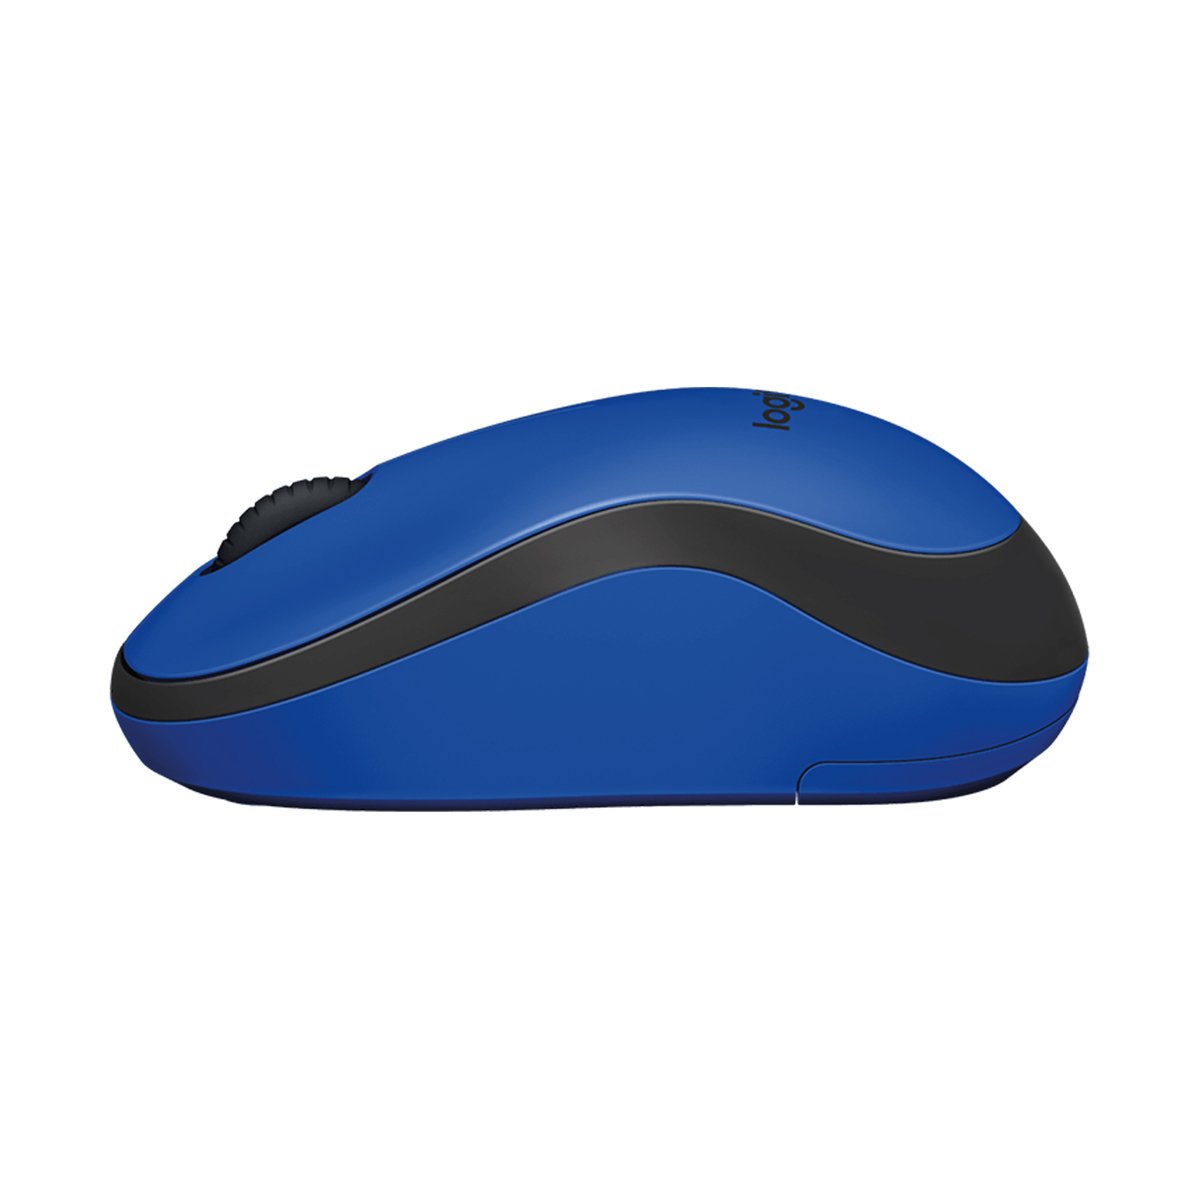 Logitech Wireless Mouse M221 Blue